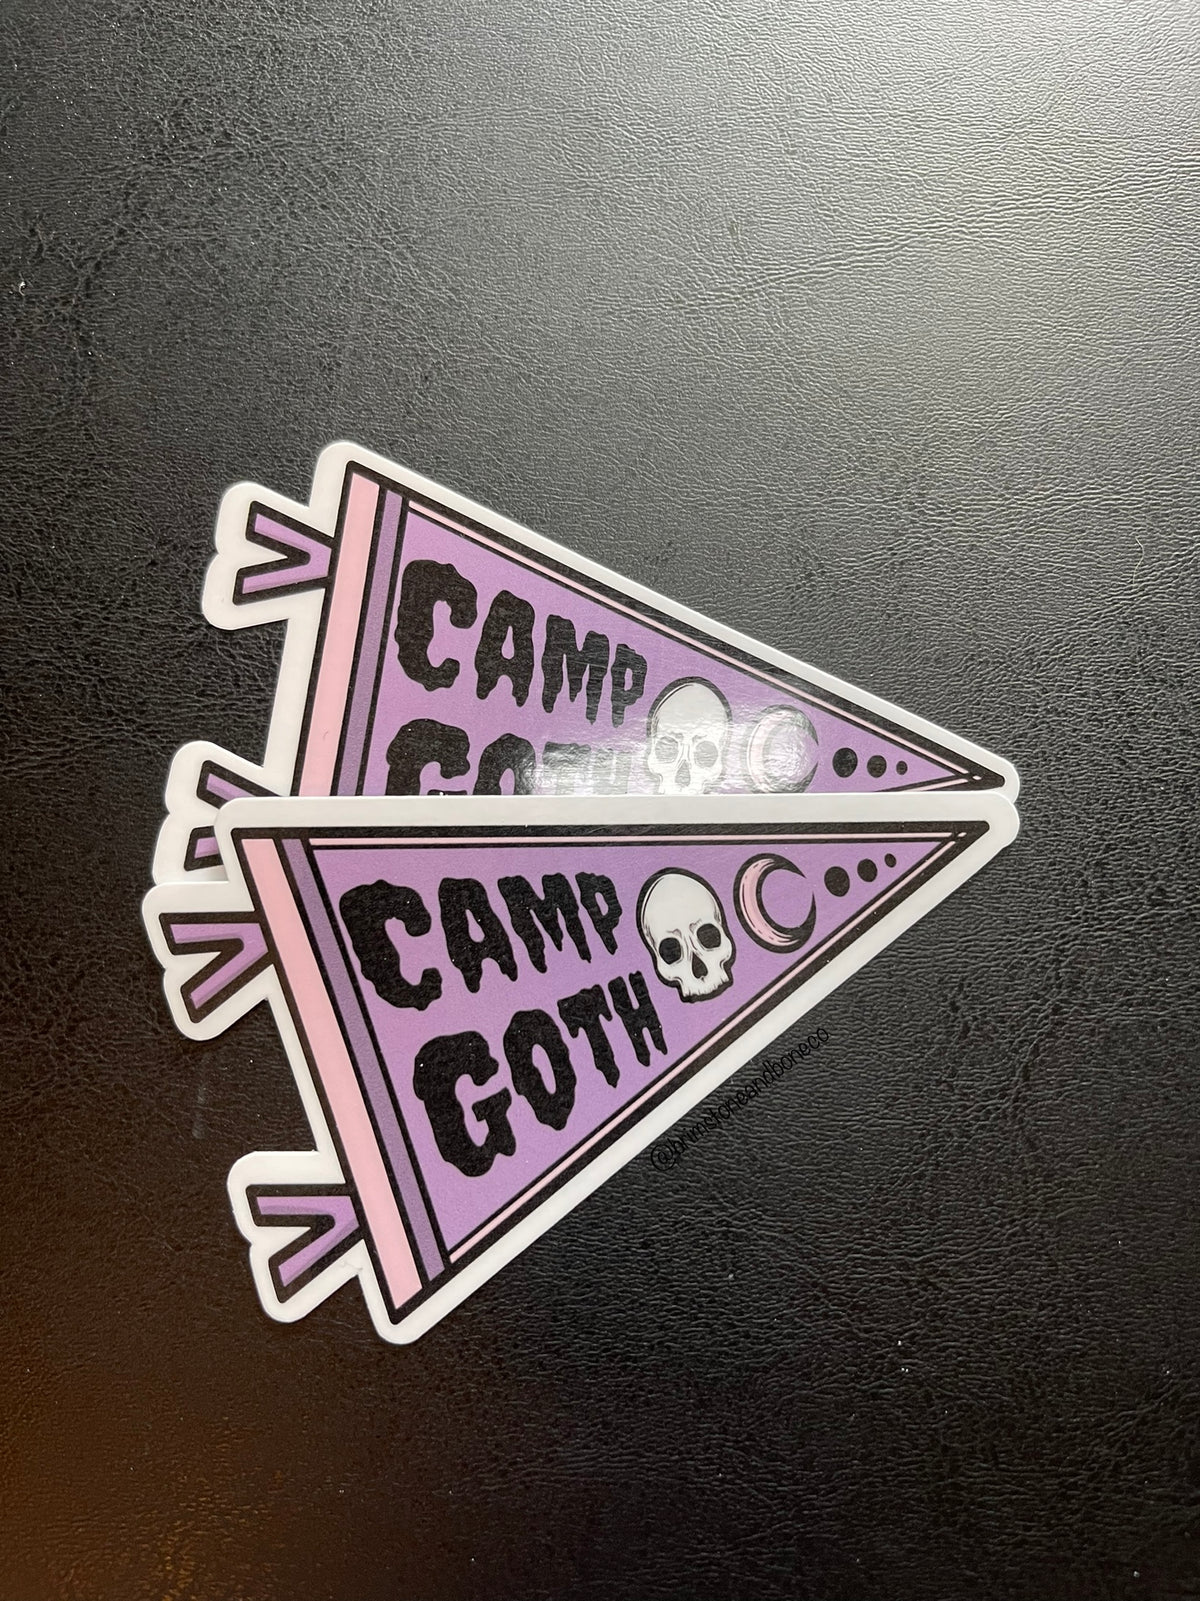 Camp Goth Flag Vinyl Sticker